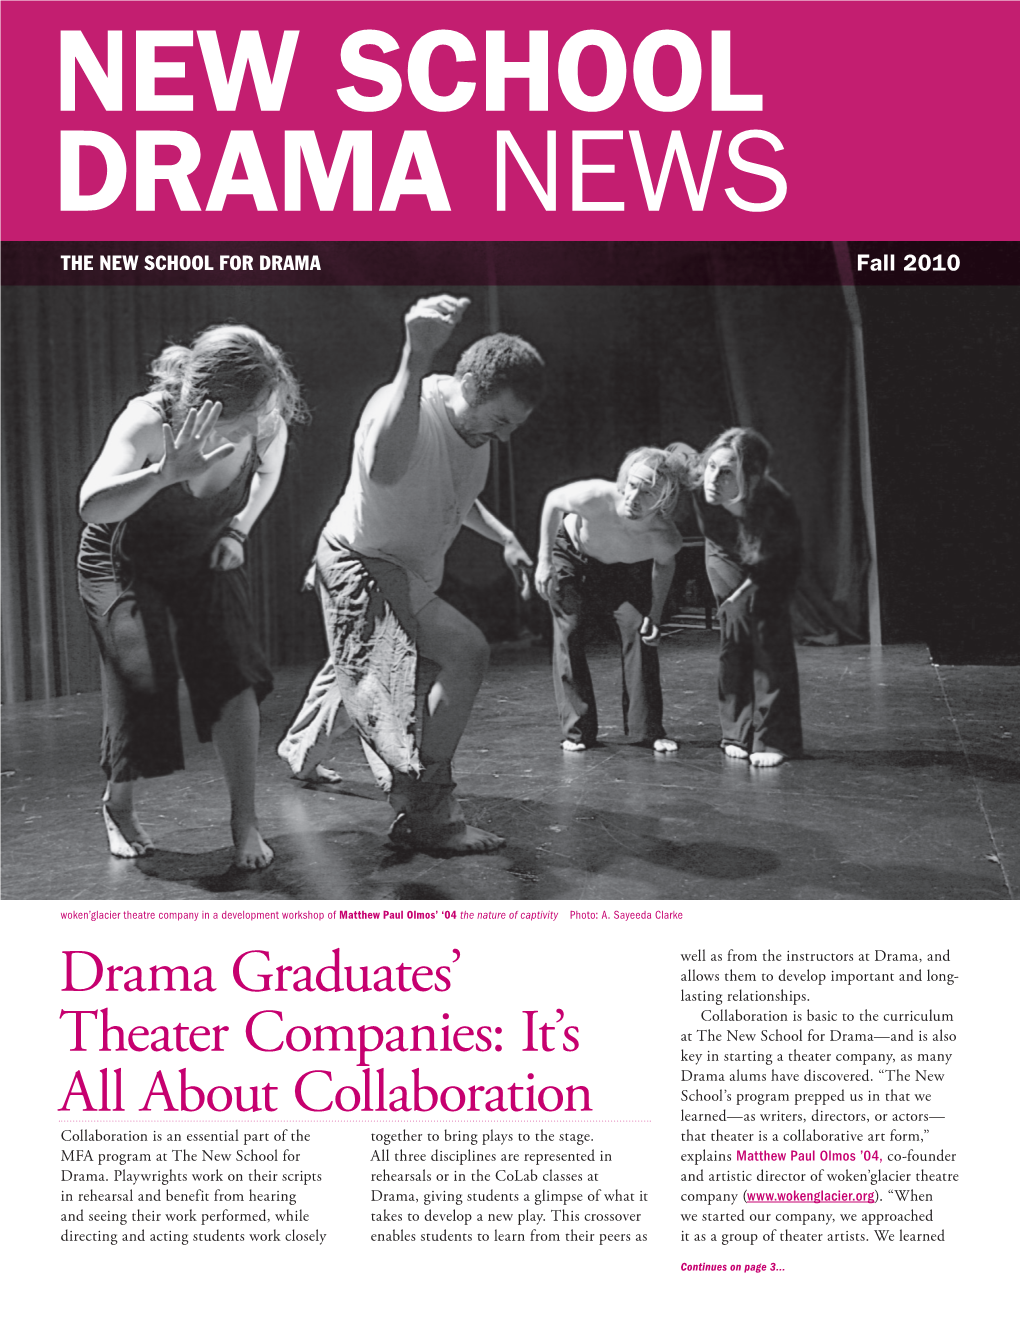 Drama Graduates' Theater Companies